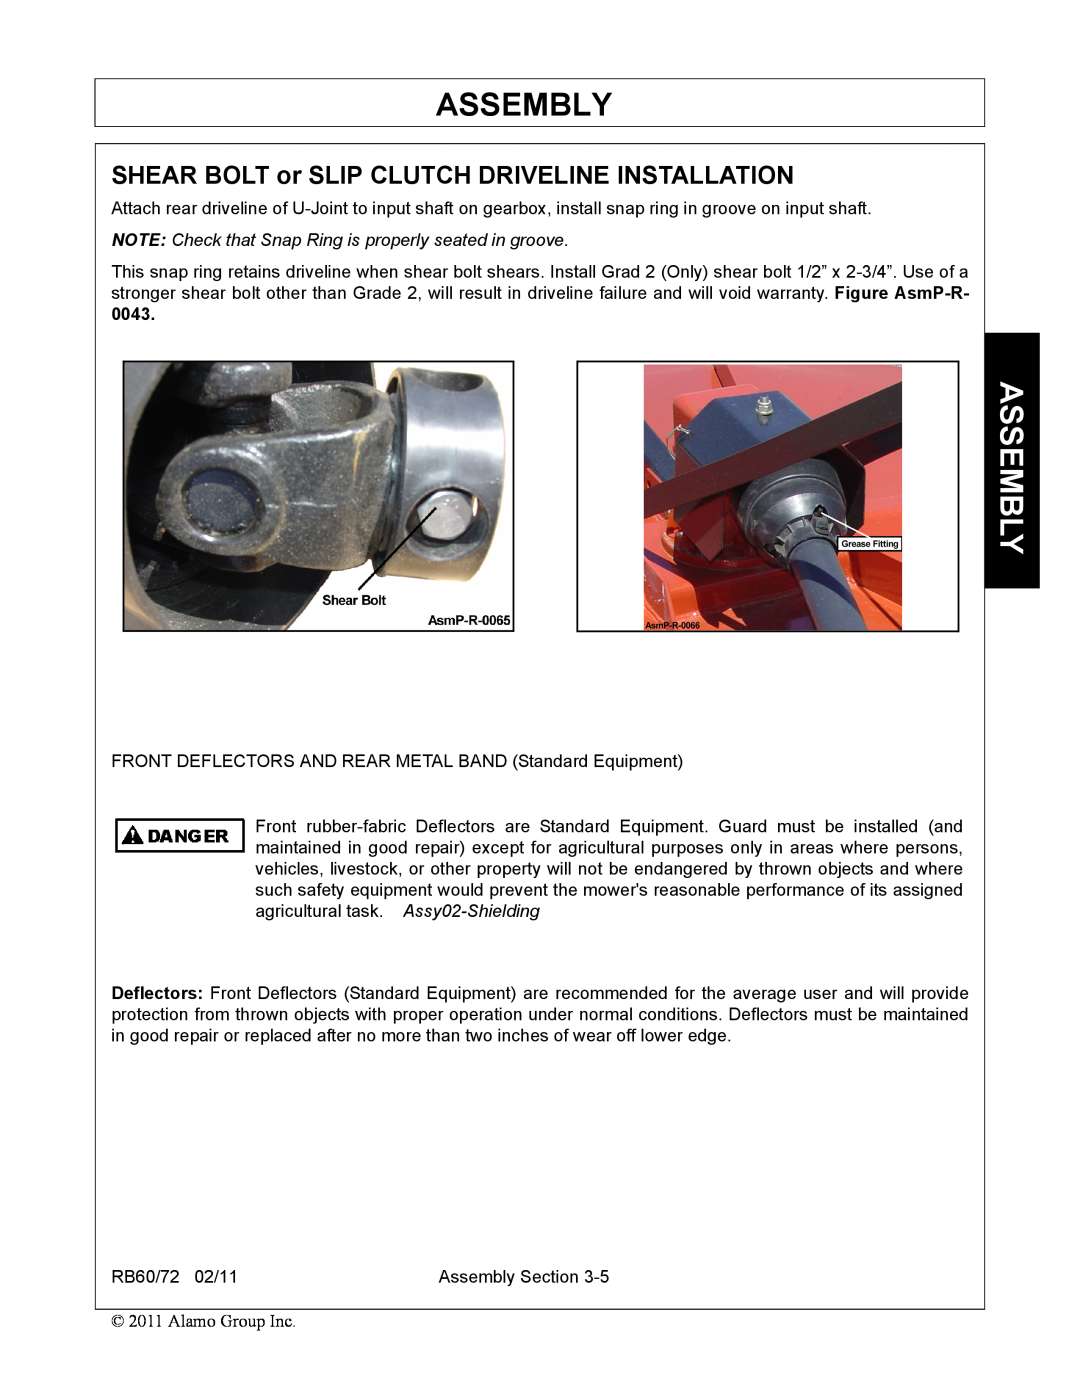 Blue Rhino RB60/72 manual SHEAR BOLT or SLIP CLUTCH DRIVELINE INSTALLATION, Assembly 